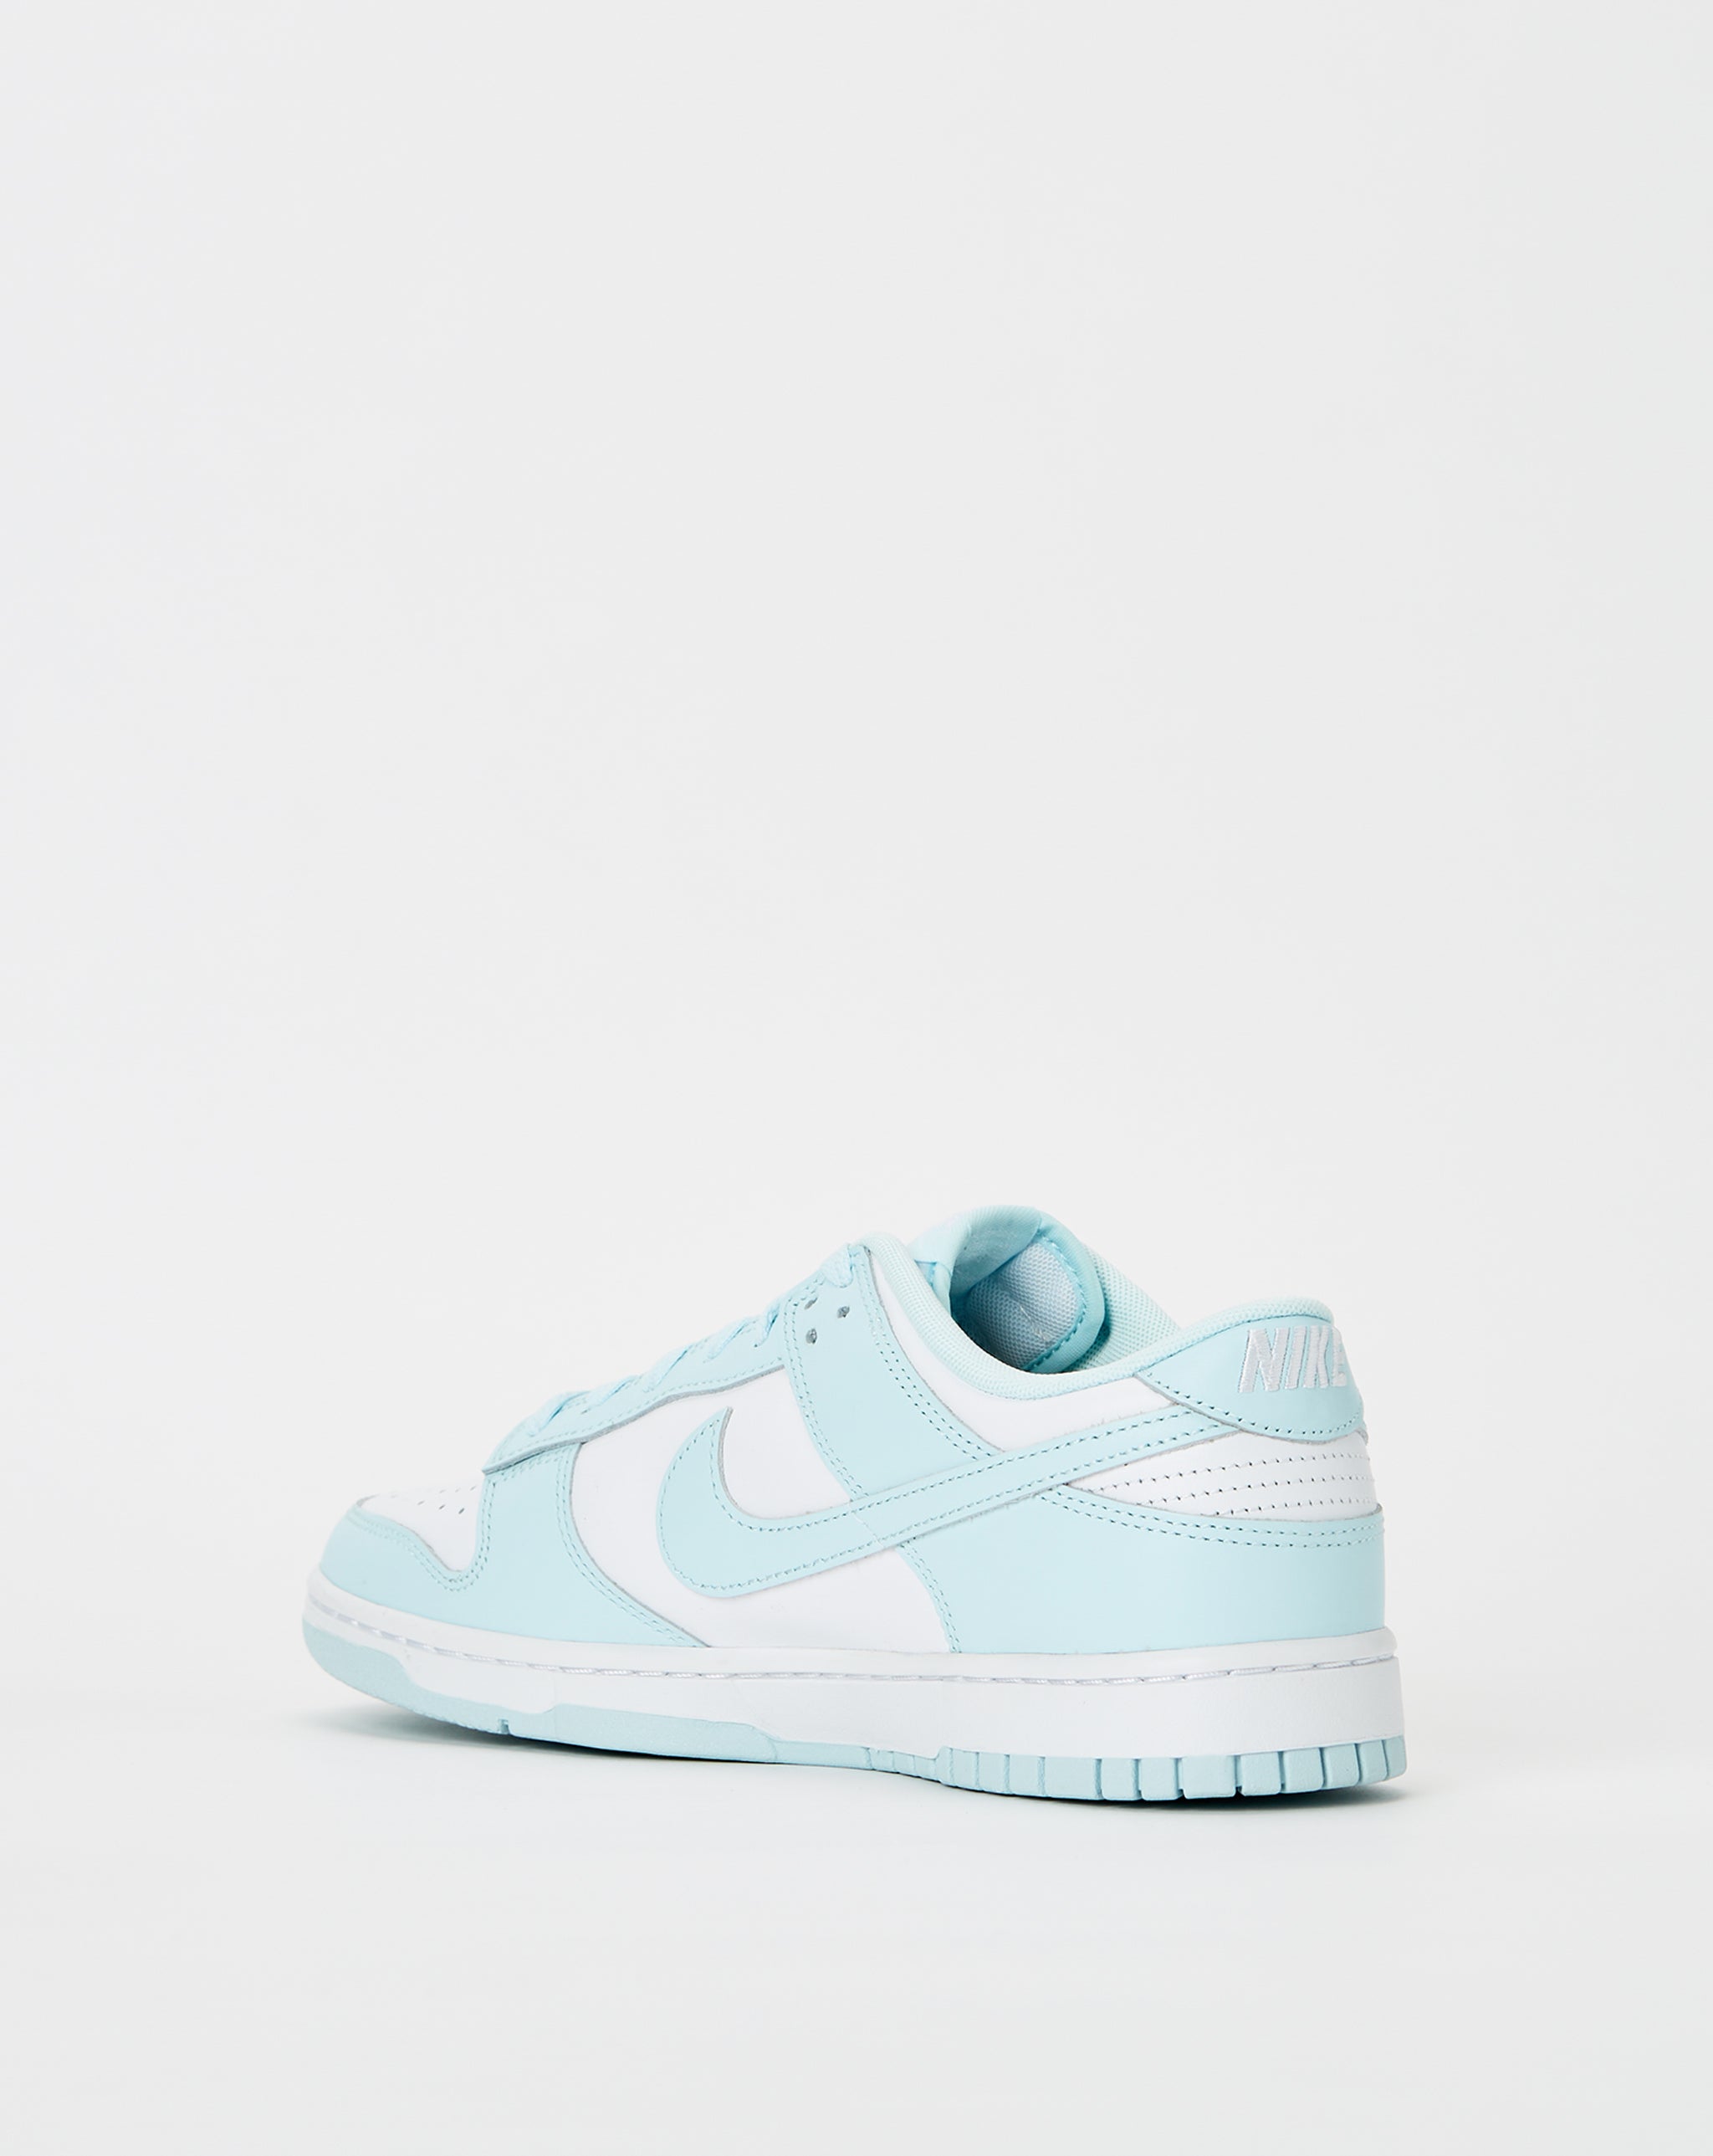 Nike Stable for a plated shoe 'Glacier Blue'  - Cheap Erlebniswelt-fliegenfischen Jordan outlet